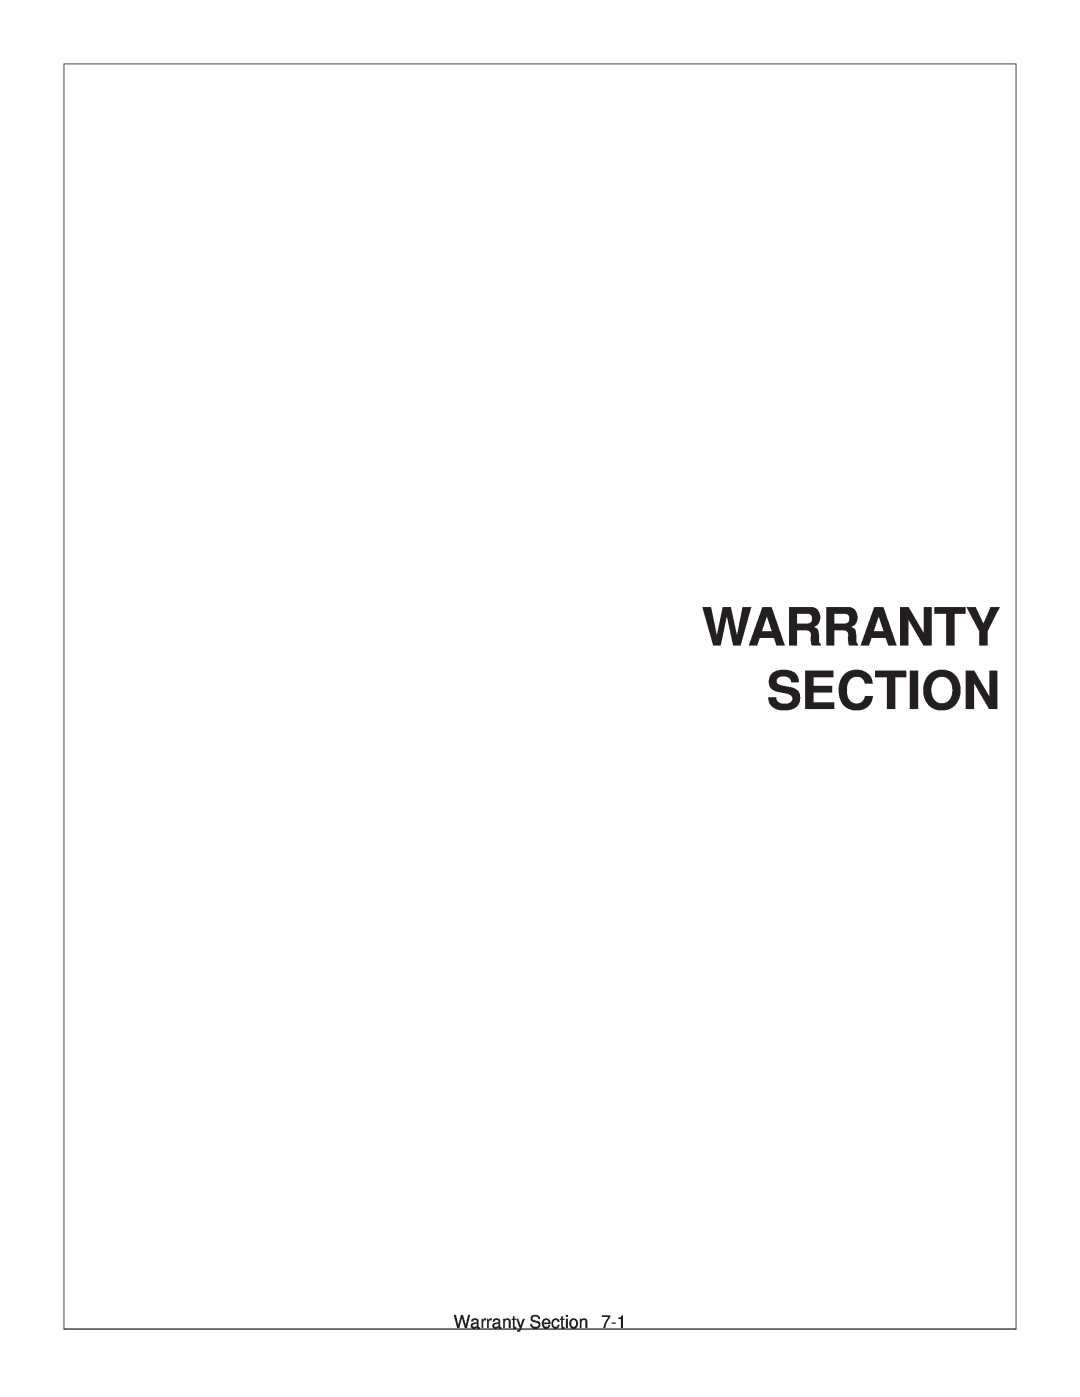 Tiger Products Co., Ltd JD 5101E, JD 5083E, JD 5093E manual Warranty Section 